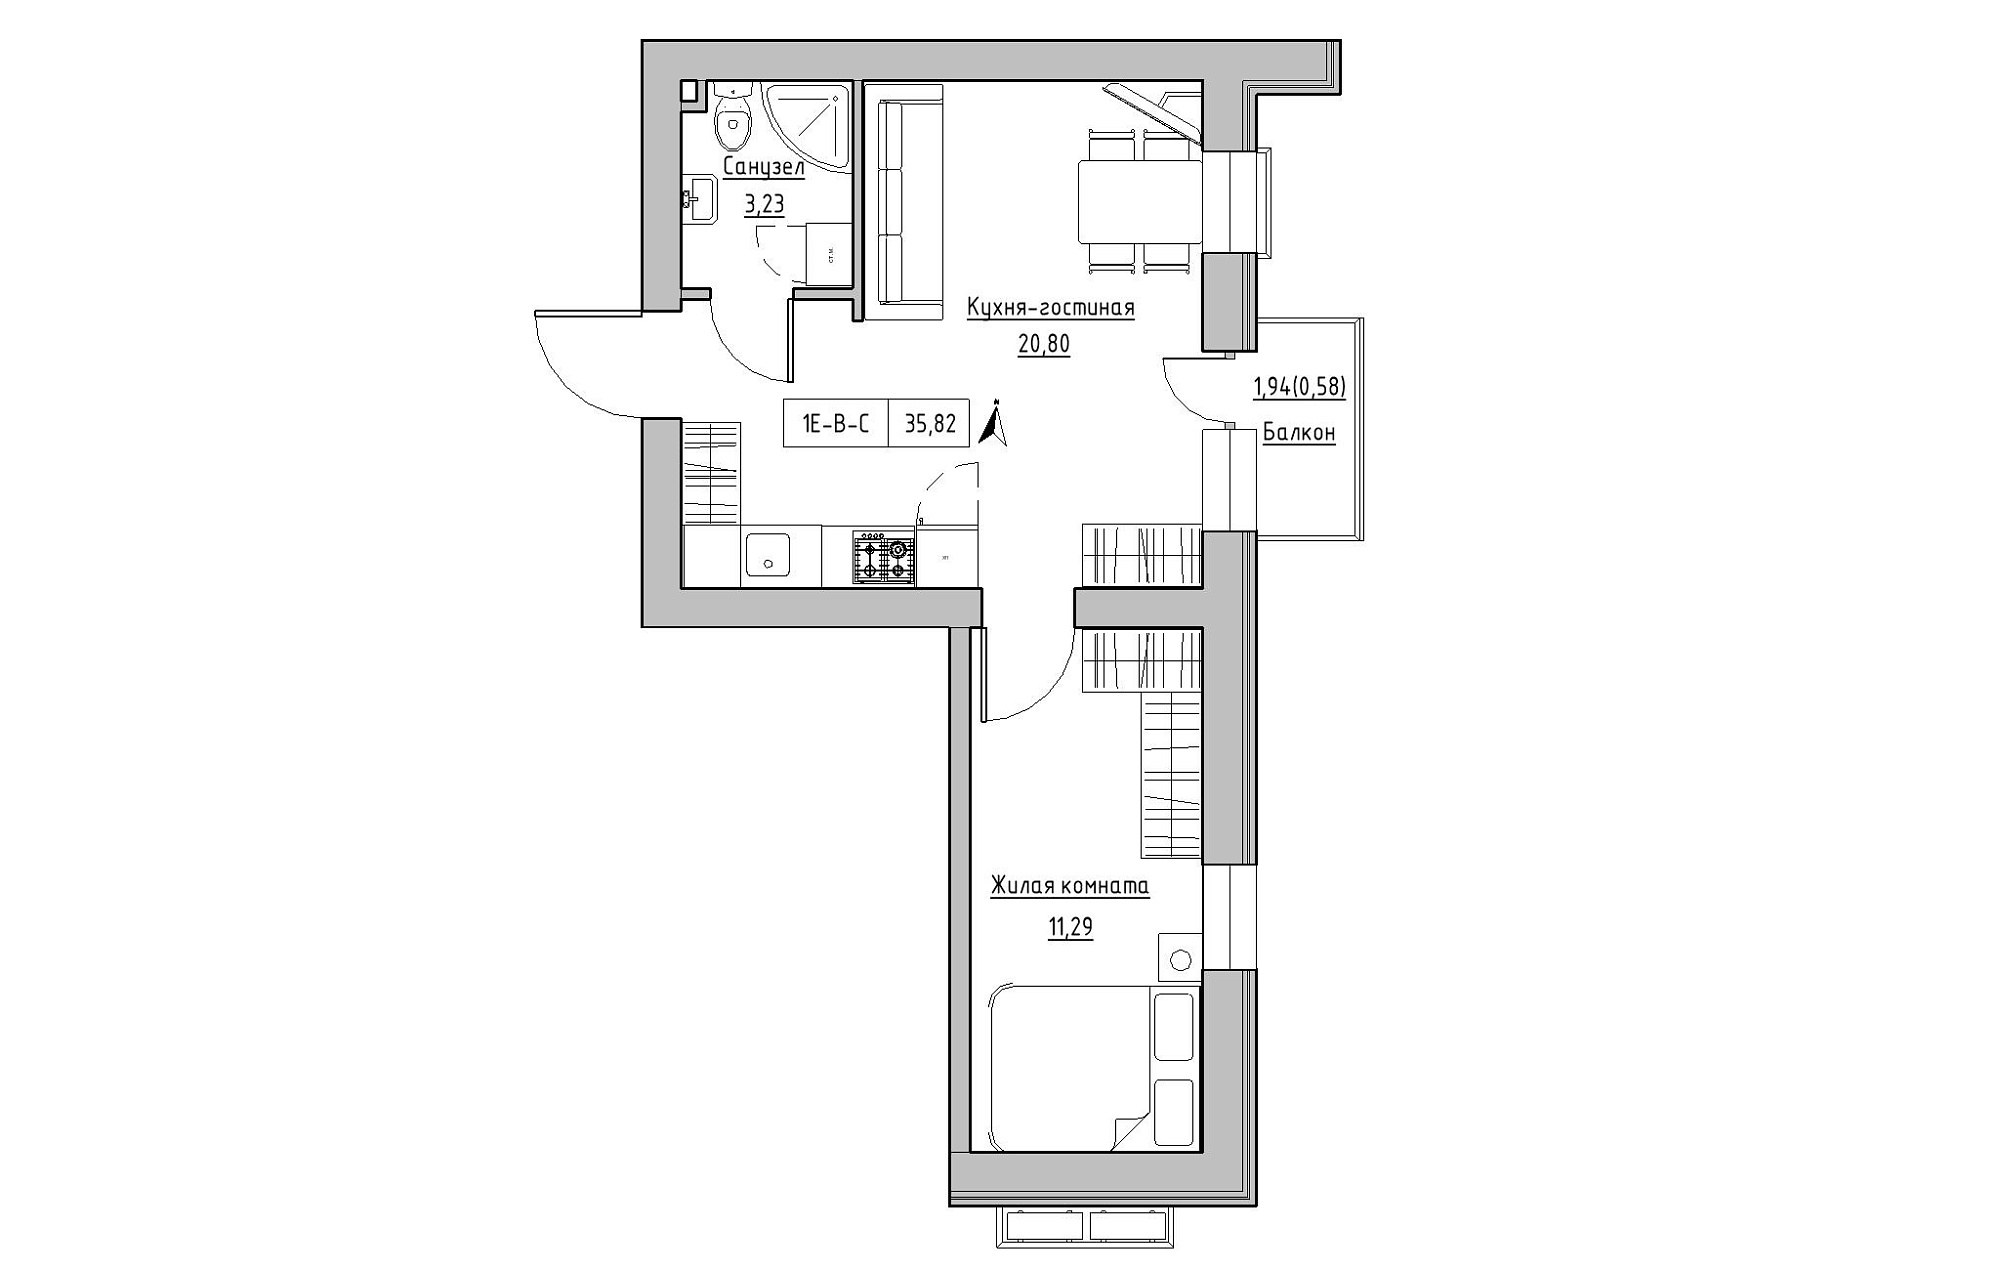 Planning 1-rm flats area 35.82m2, KS-019-04/0007.